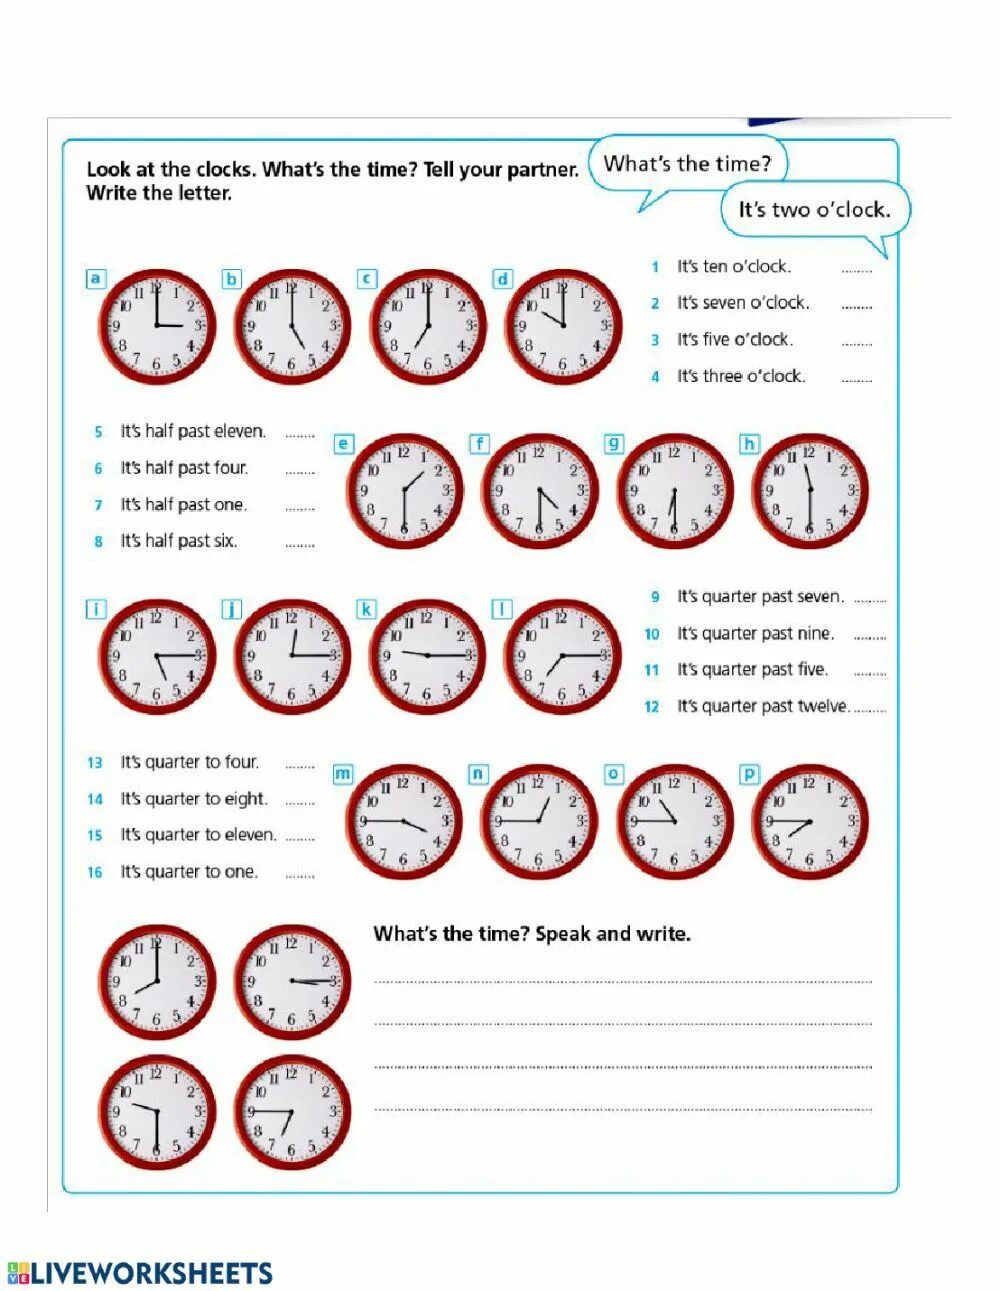 Telling the time worksheet. Telling the time задания. Время на английском языке Worksheets. Время на часах в английском языке Worksheets. Упражнения на время в английском языке часы.